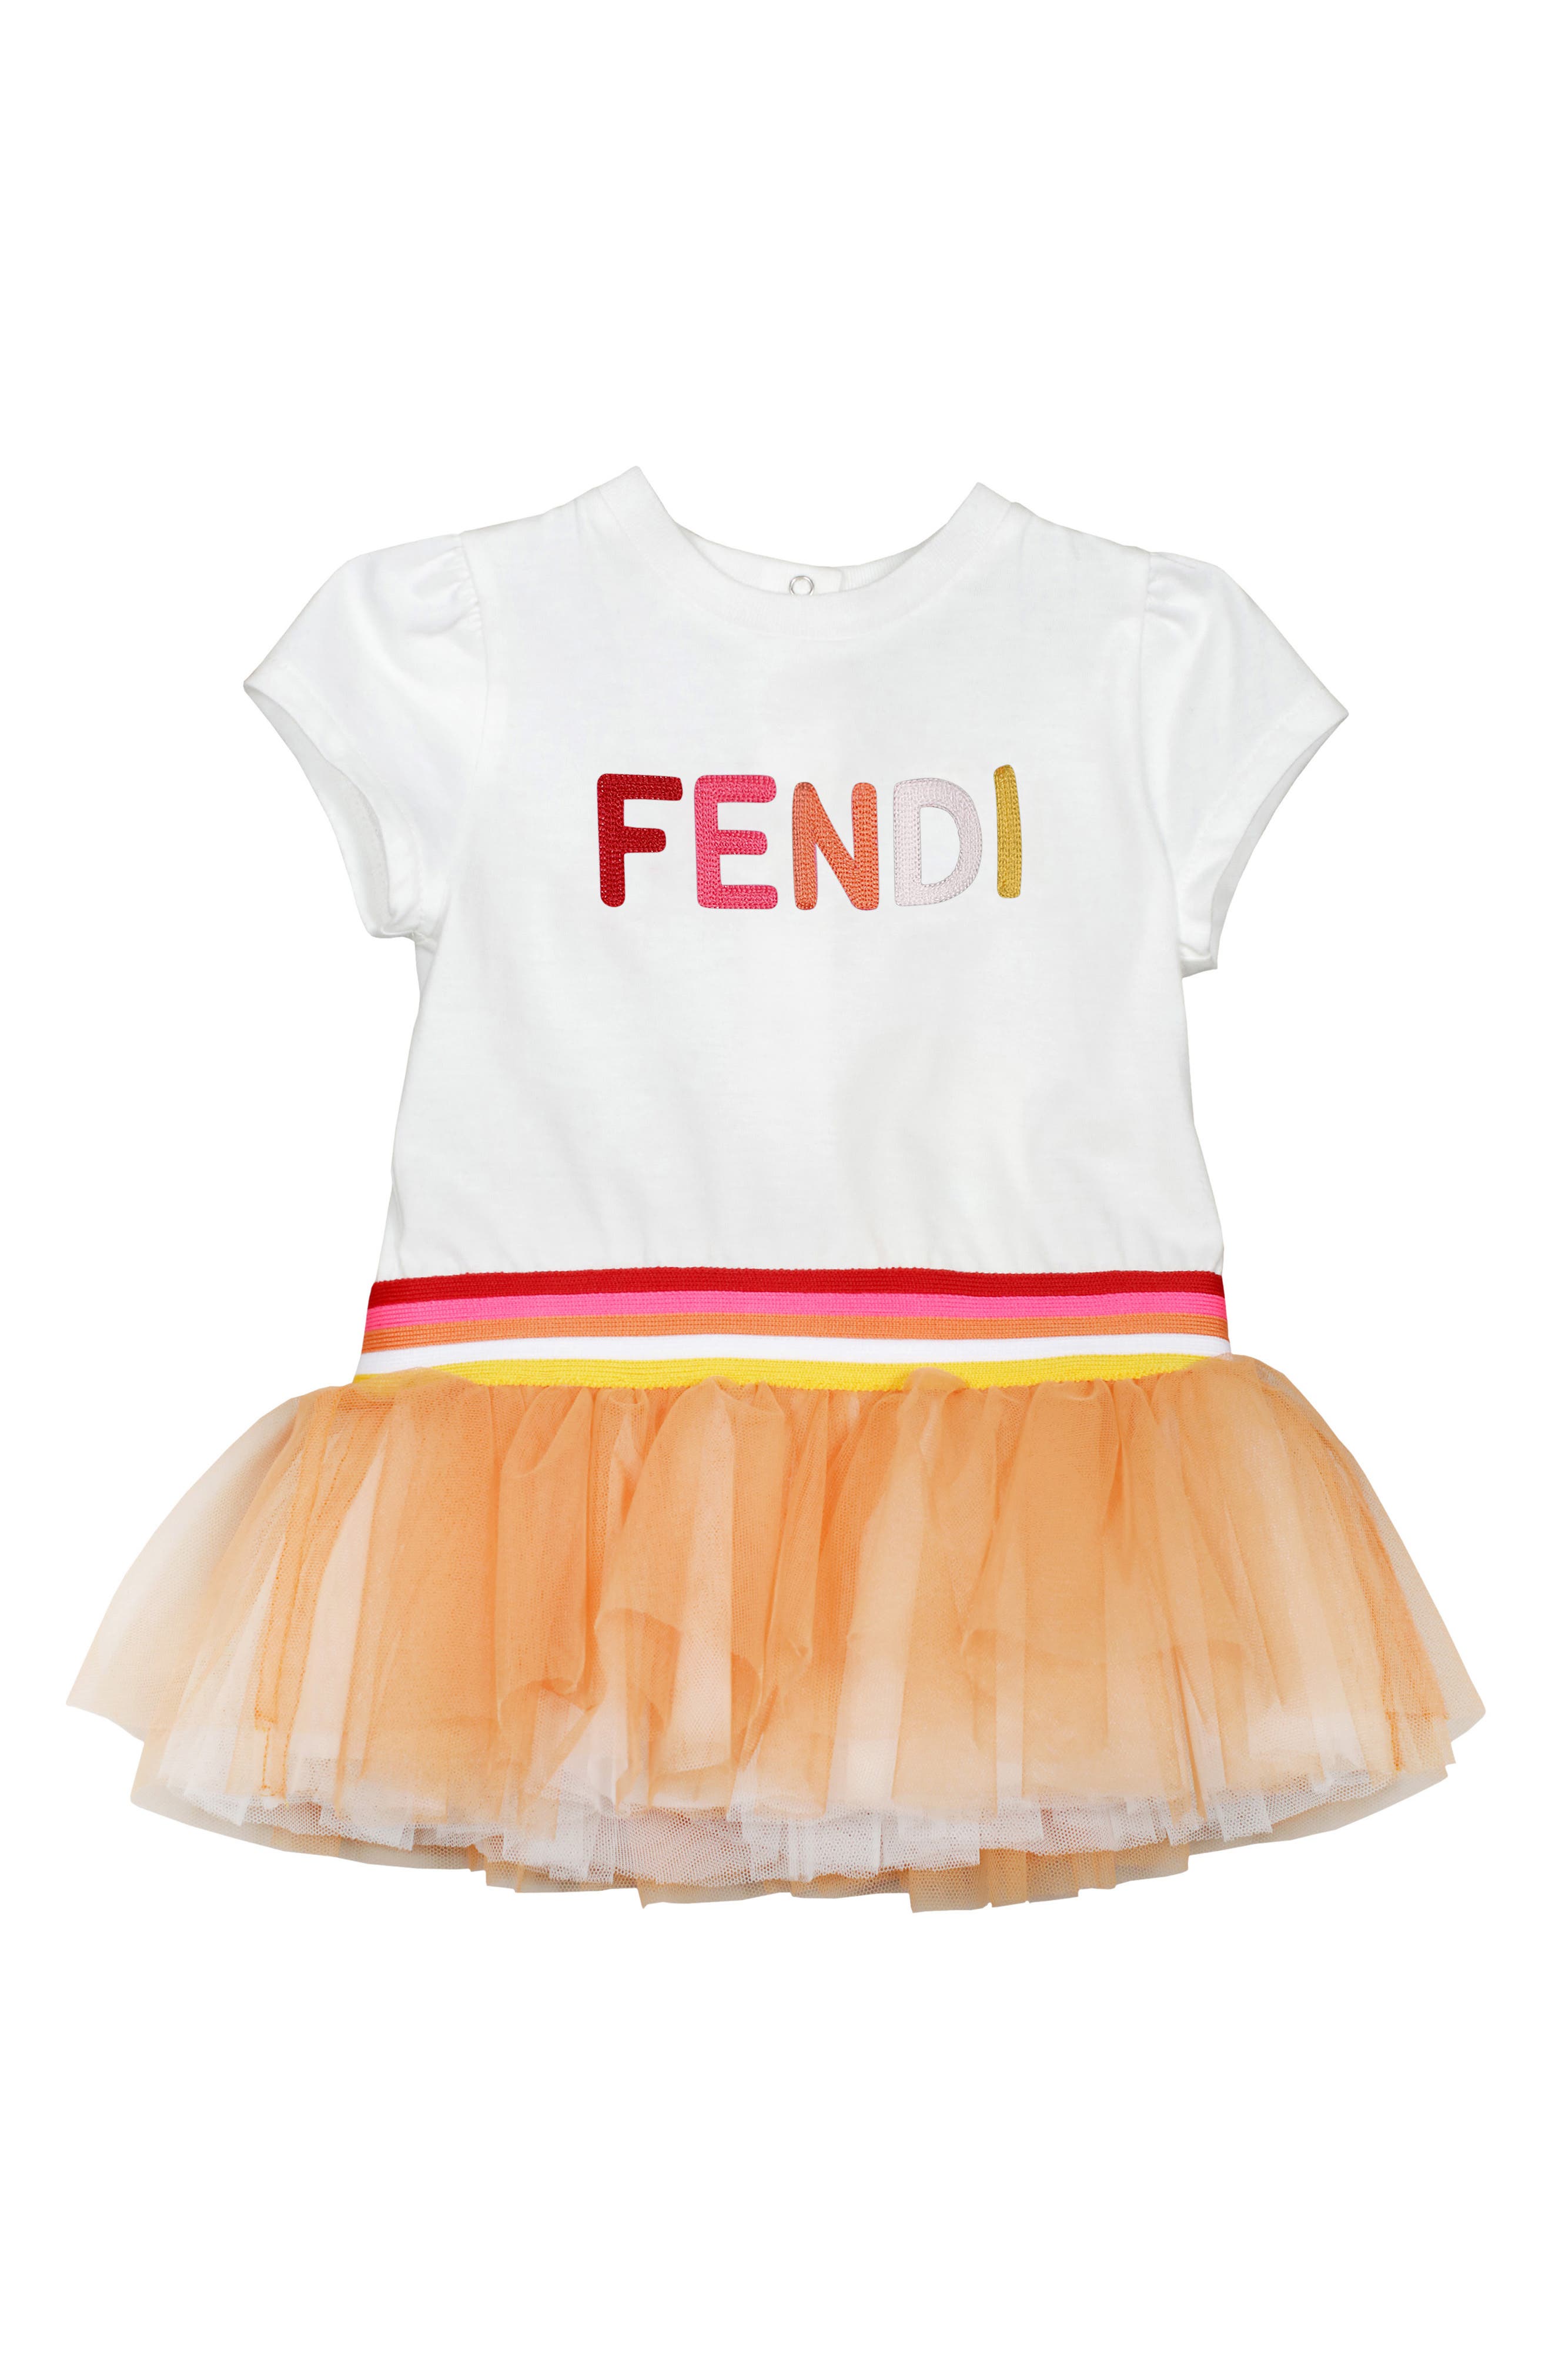 fendi baby girl clothes